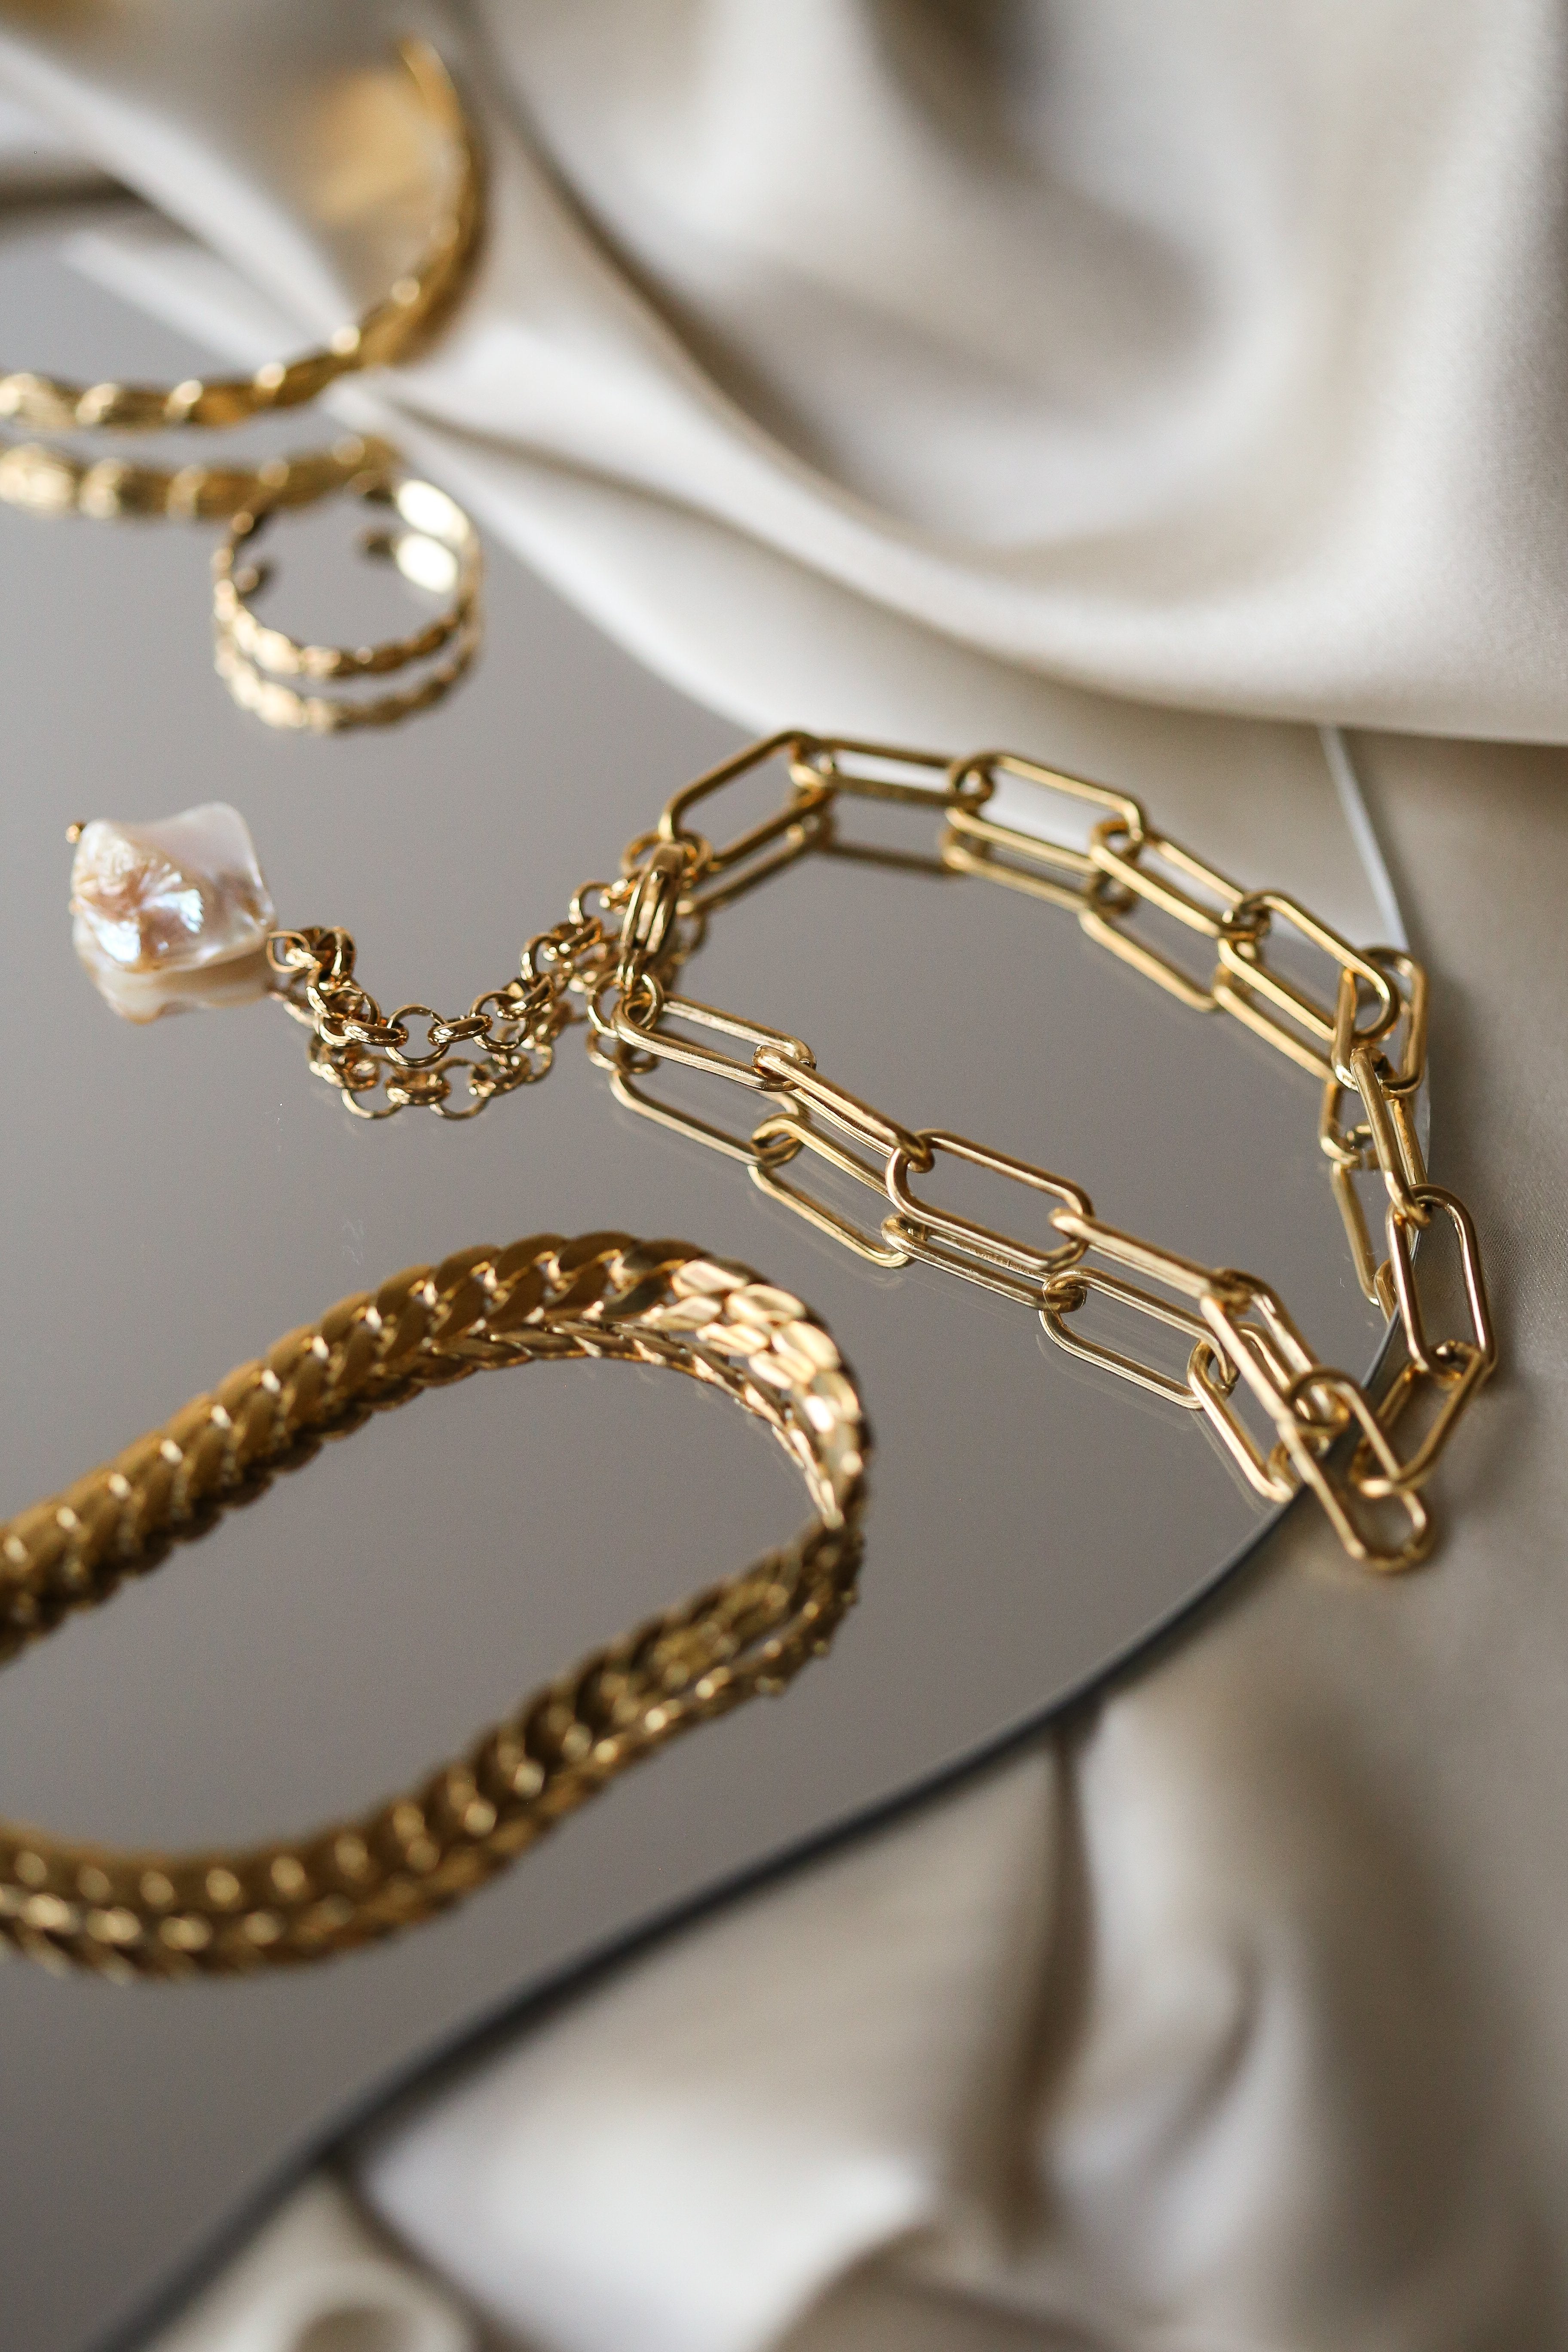 Freya Anklet - Boutique Minimaliste has waterproof, durable, elegant and vintage inspired jewelry